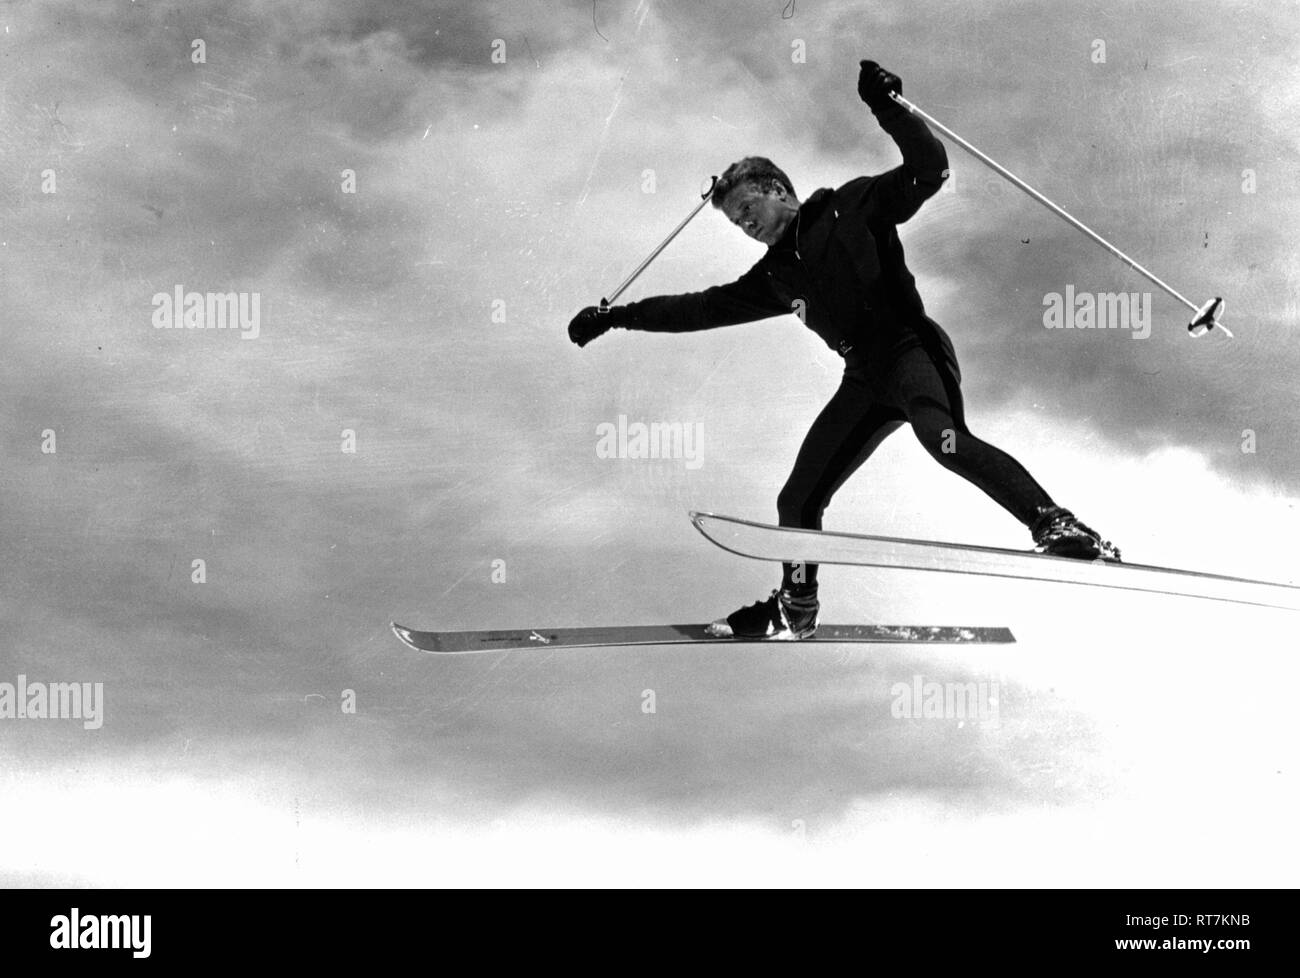 Prinzing, Gerhard, * 22.4.1943, tedesco ski racer, durante una gara, sessanta, Additional-Rights-Clearance-Info-Not-Available Foto Stock